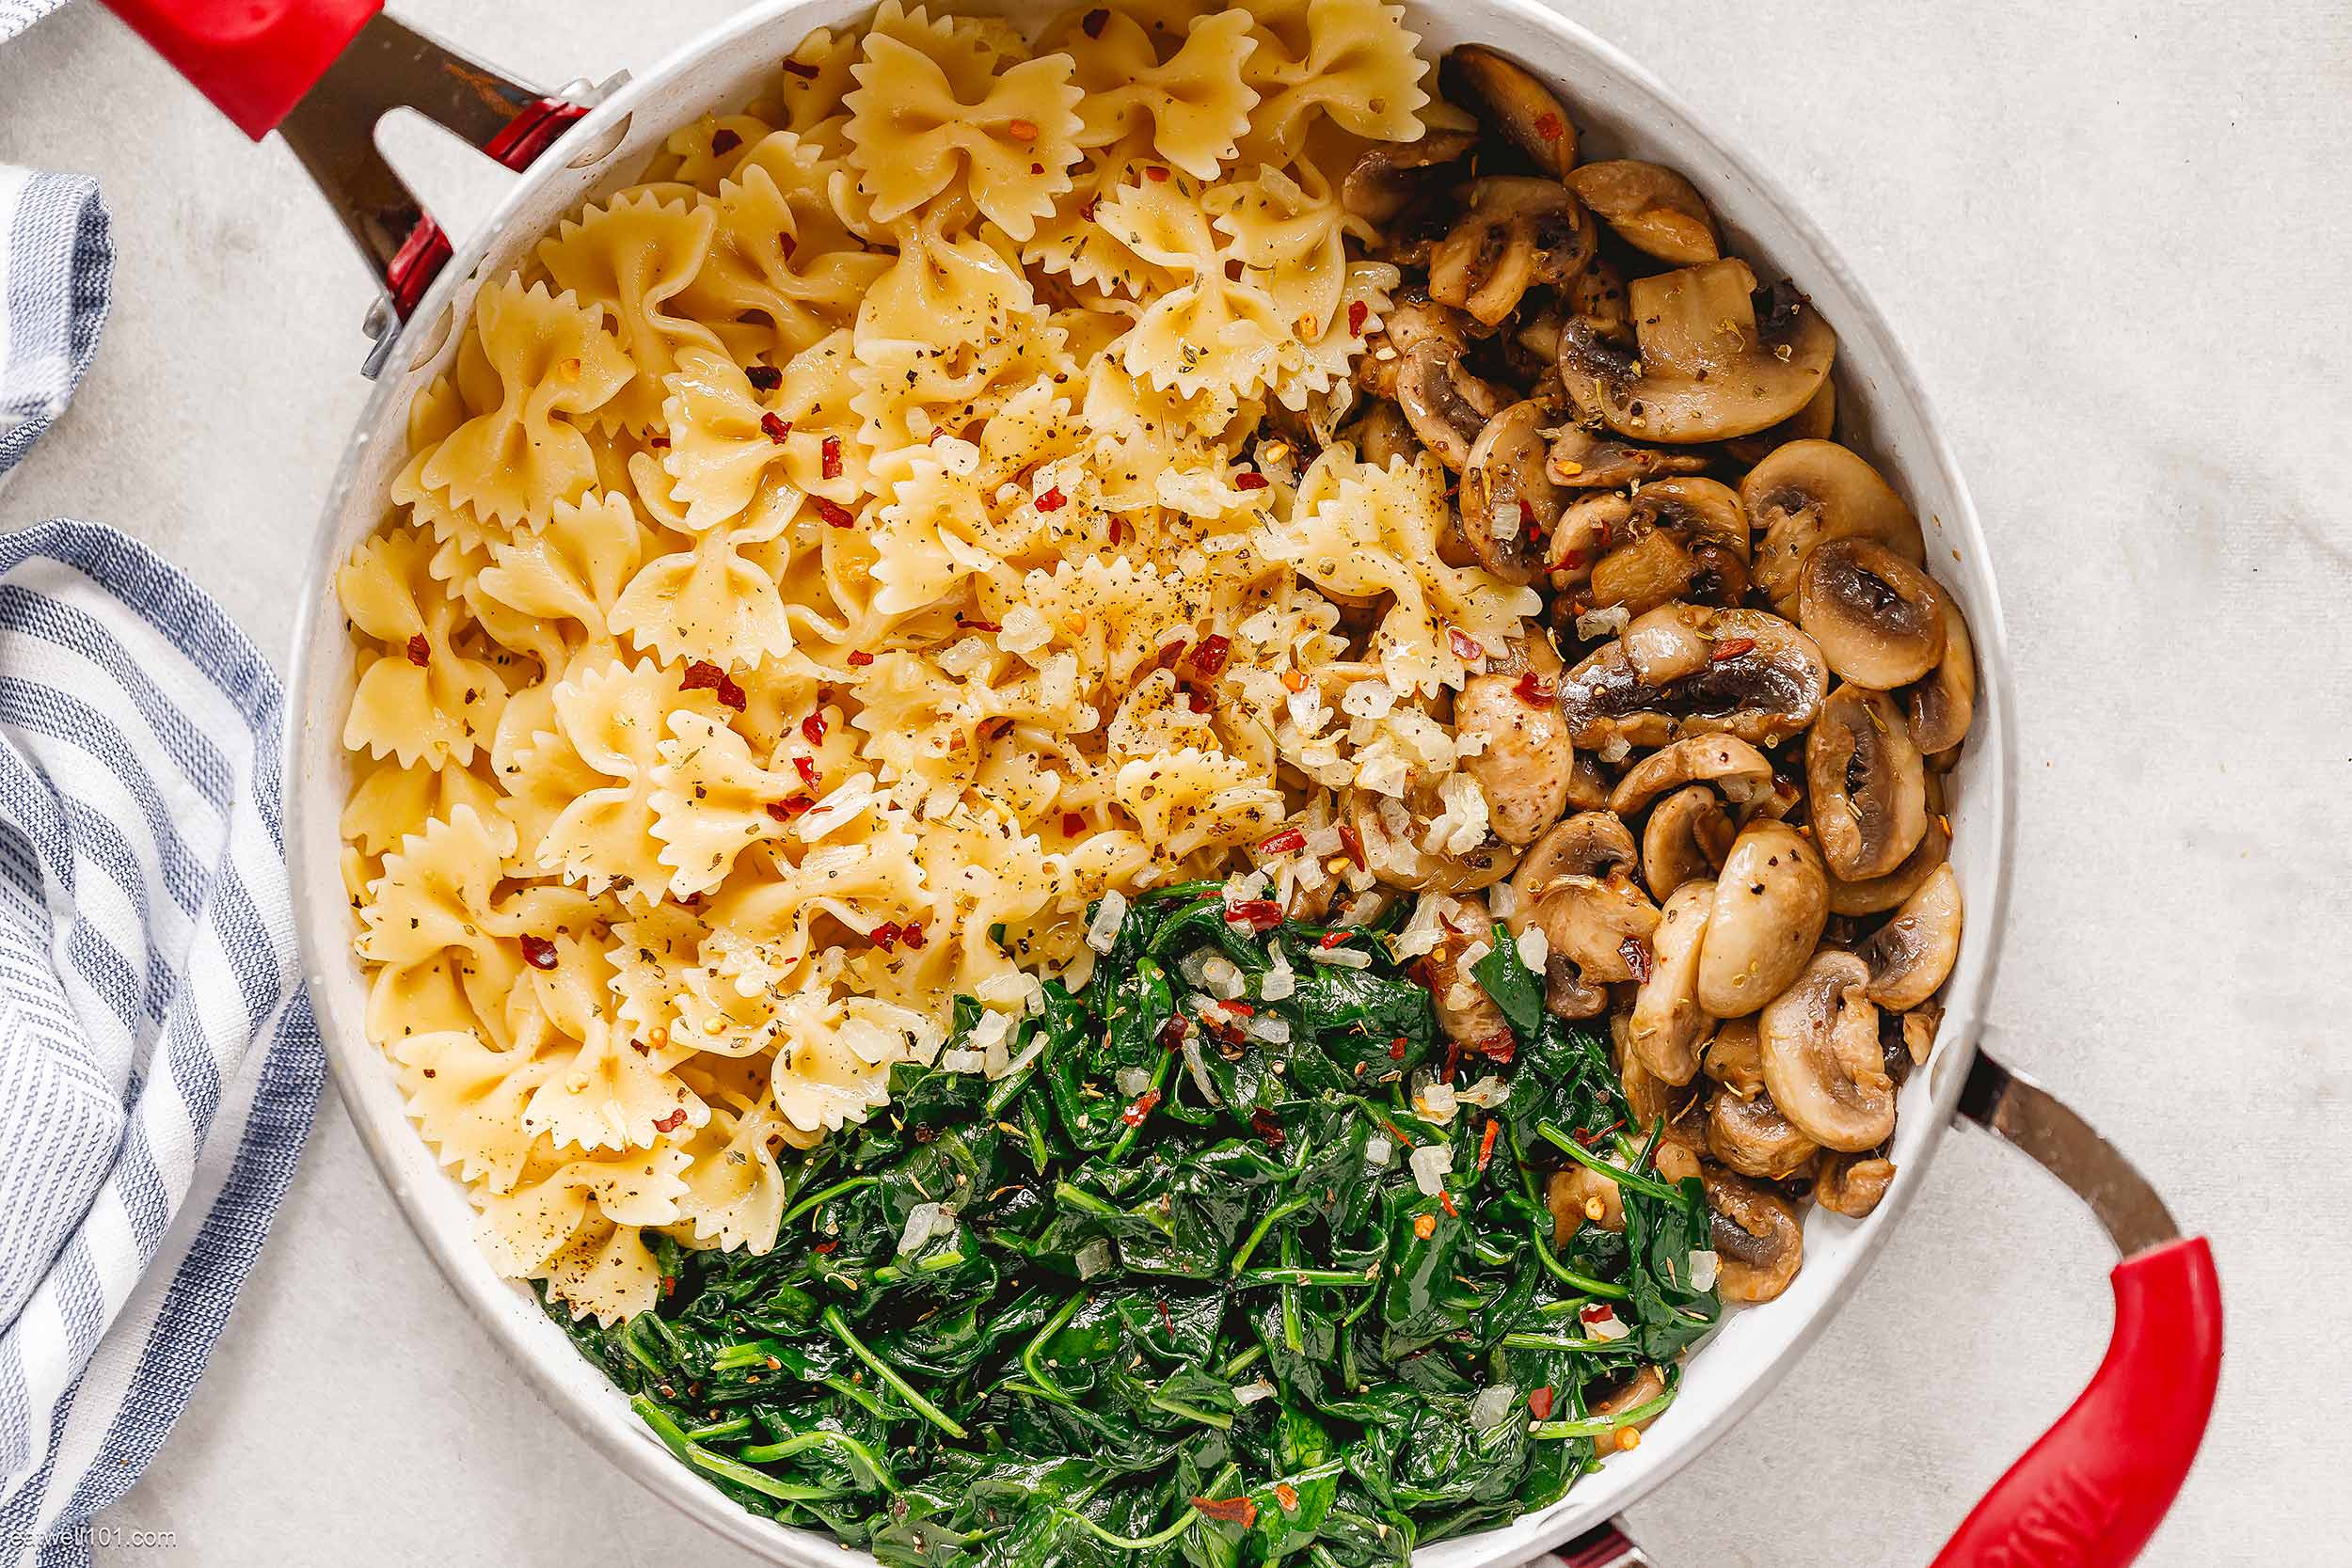 https://www.eatwell101.com/wp-content/uploads/2020/01/pasta-skillet-recipe-1.jpg